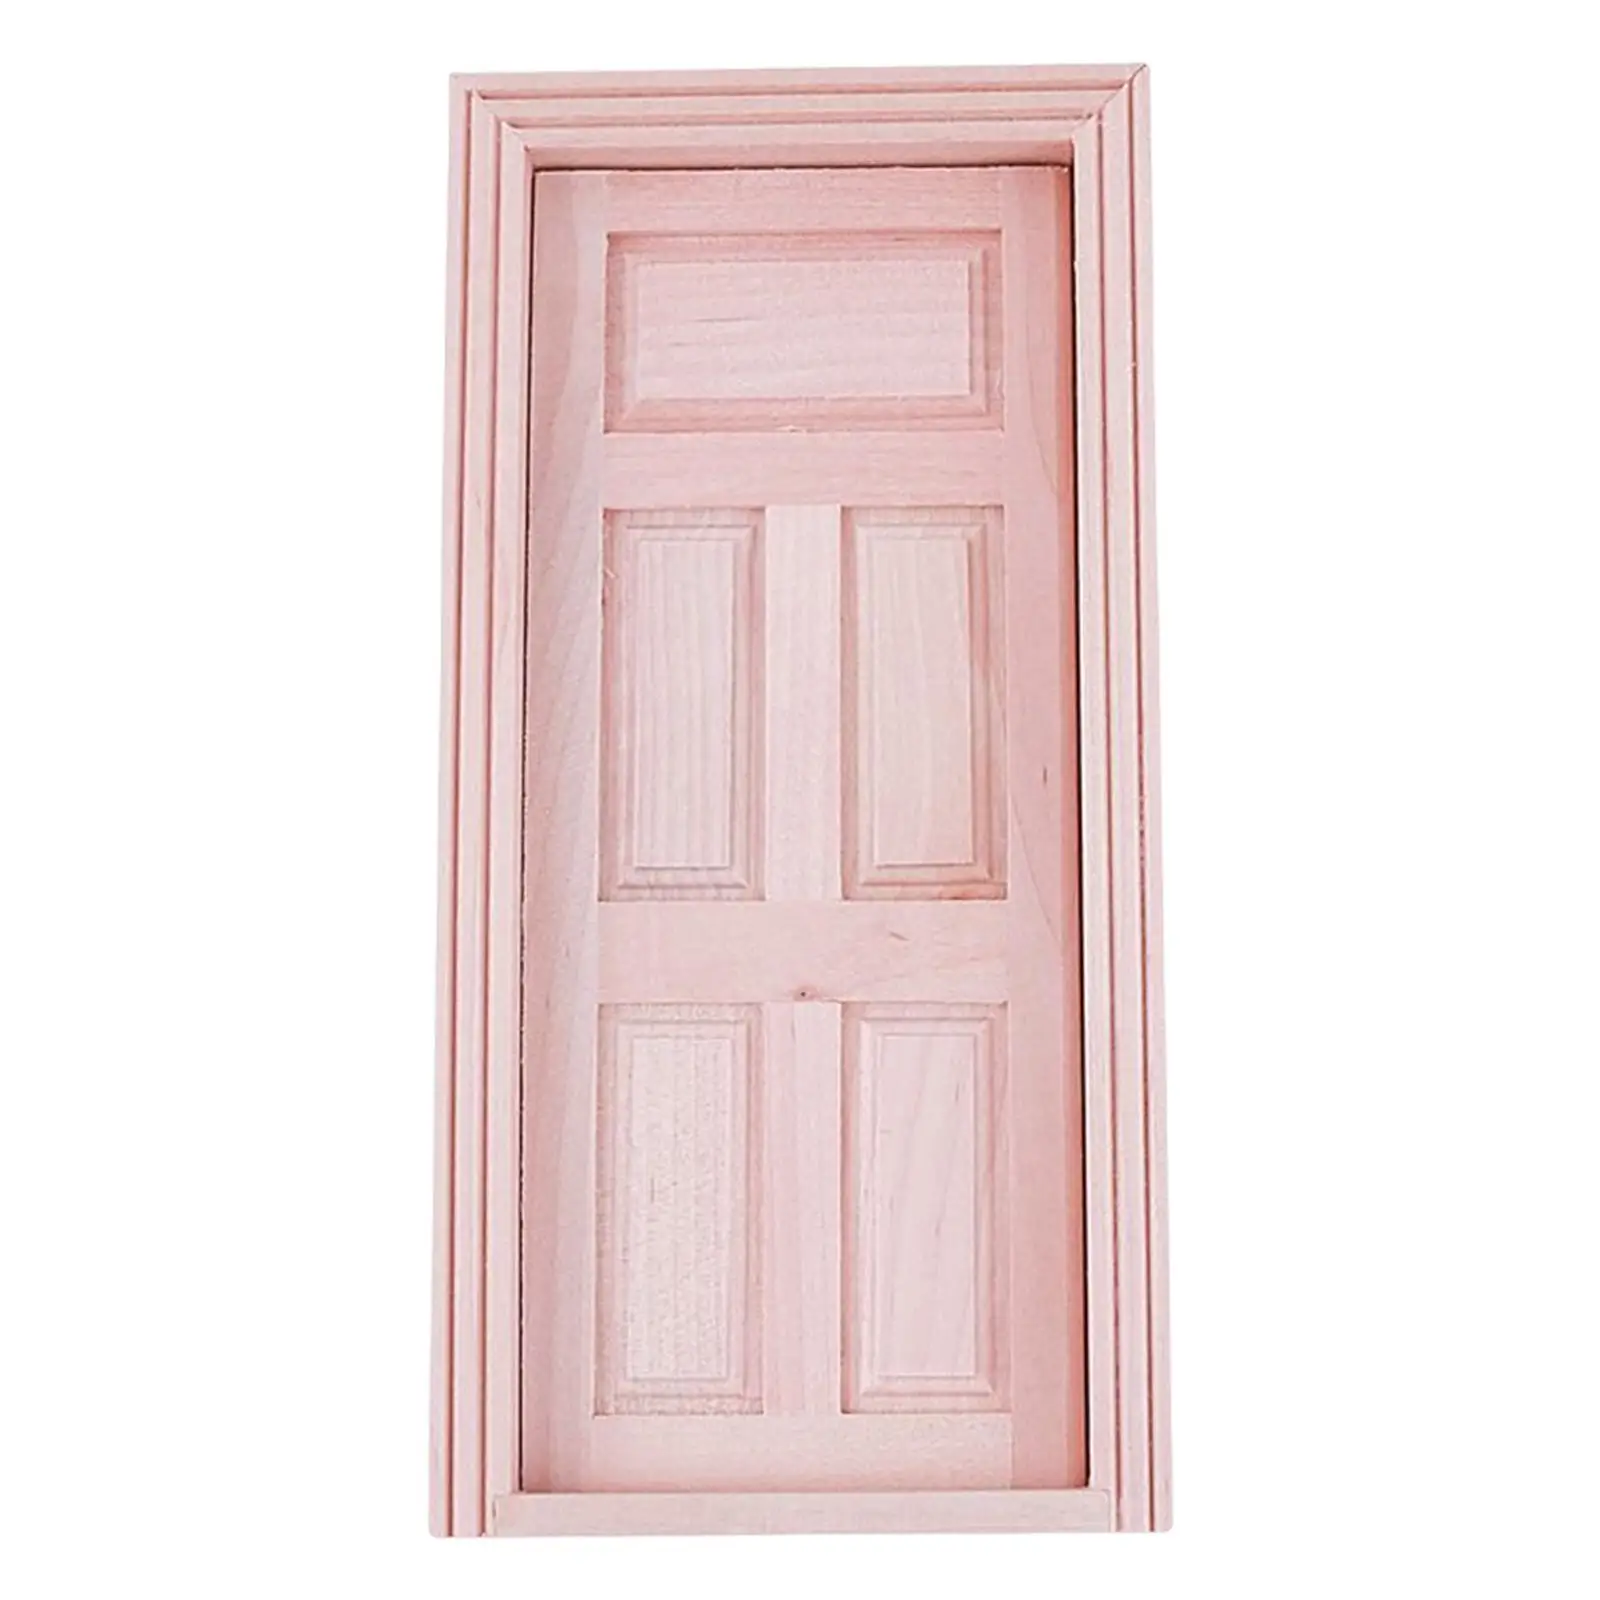 1/12 Wood Dollhouse Miniature Door Unpainted Accessory Room Box Building Kits